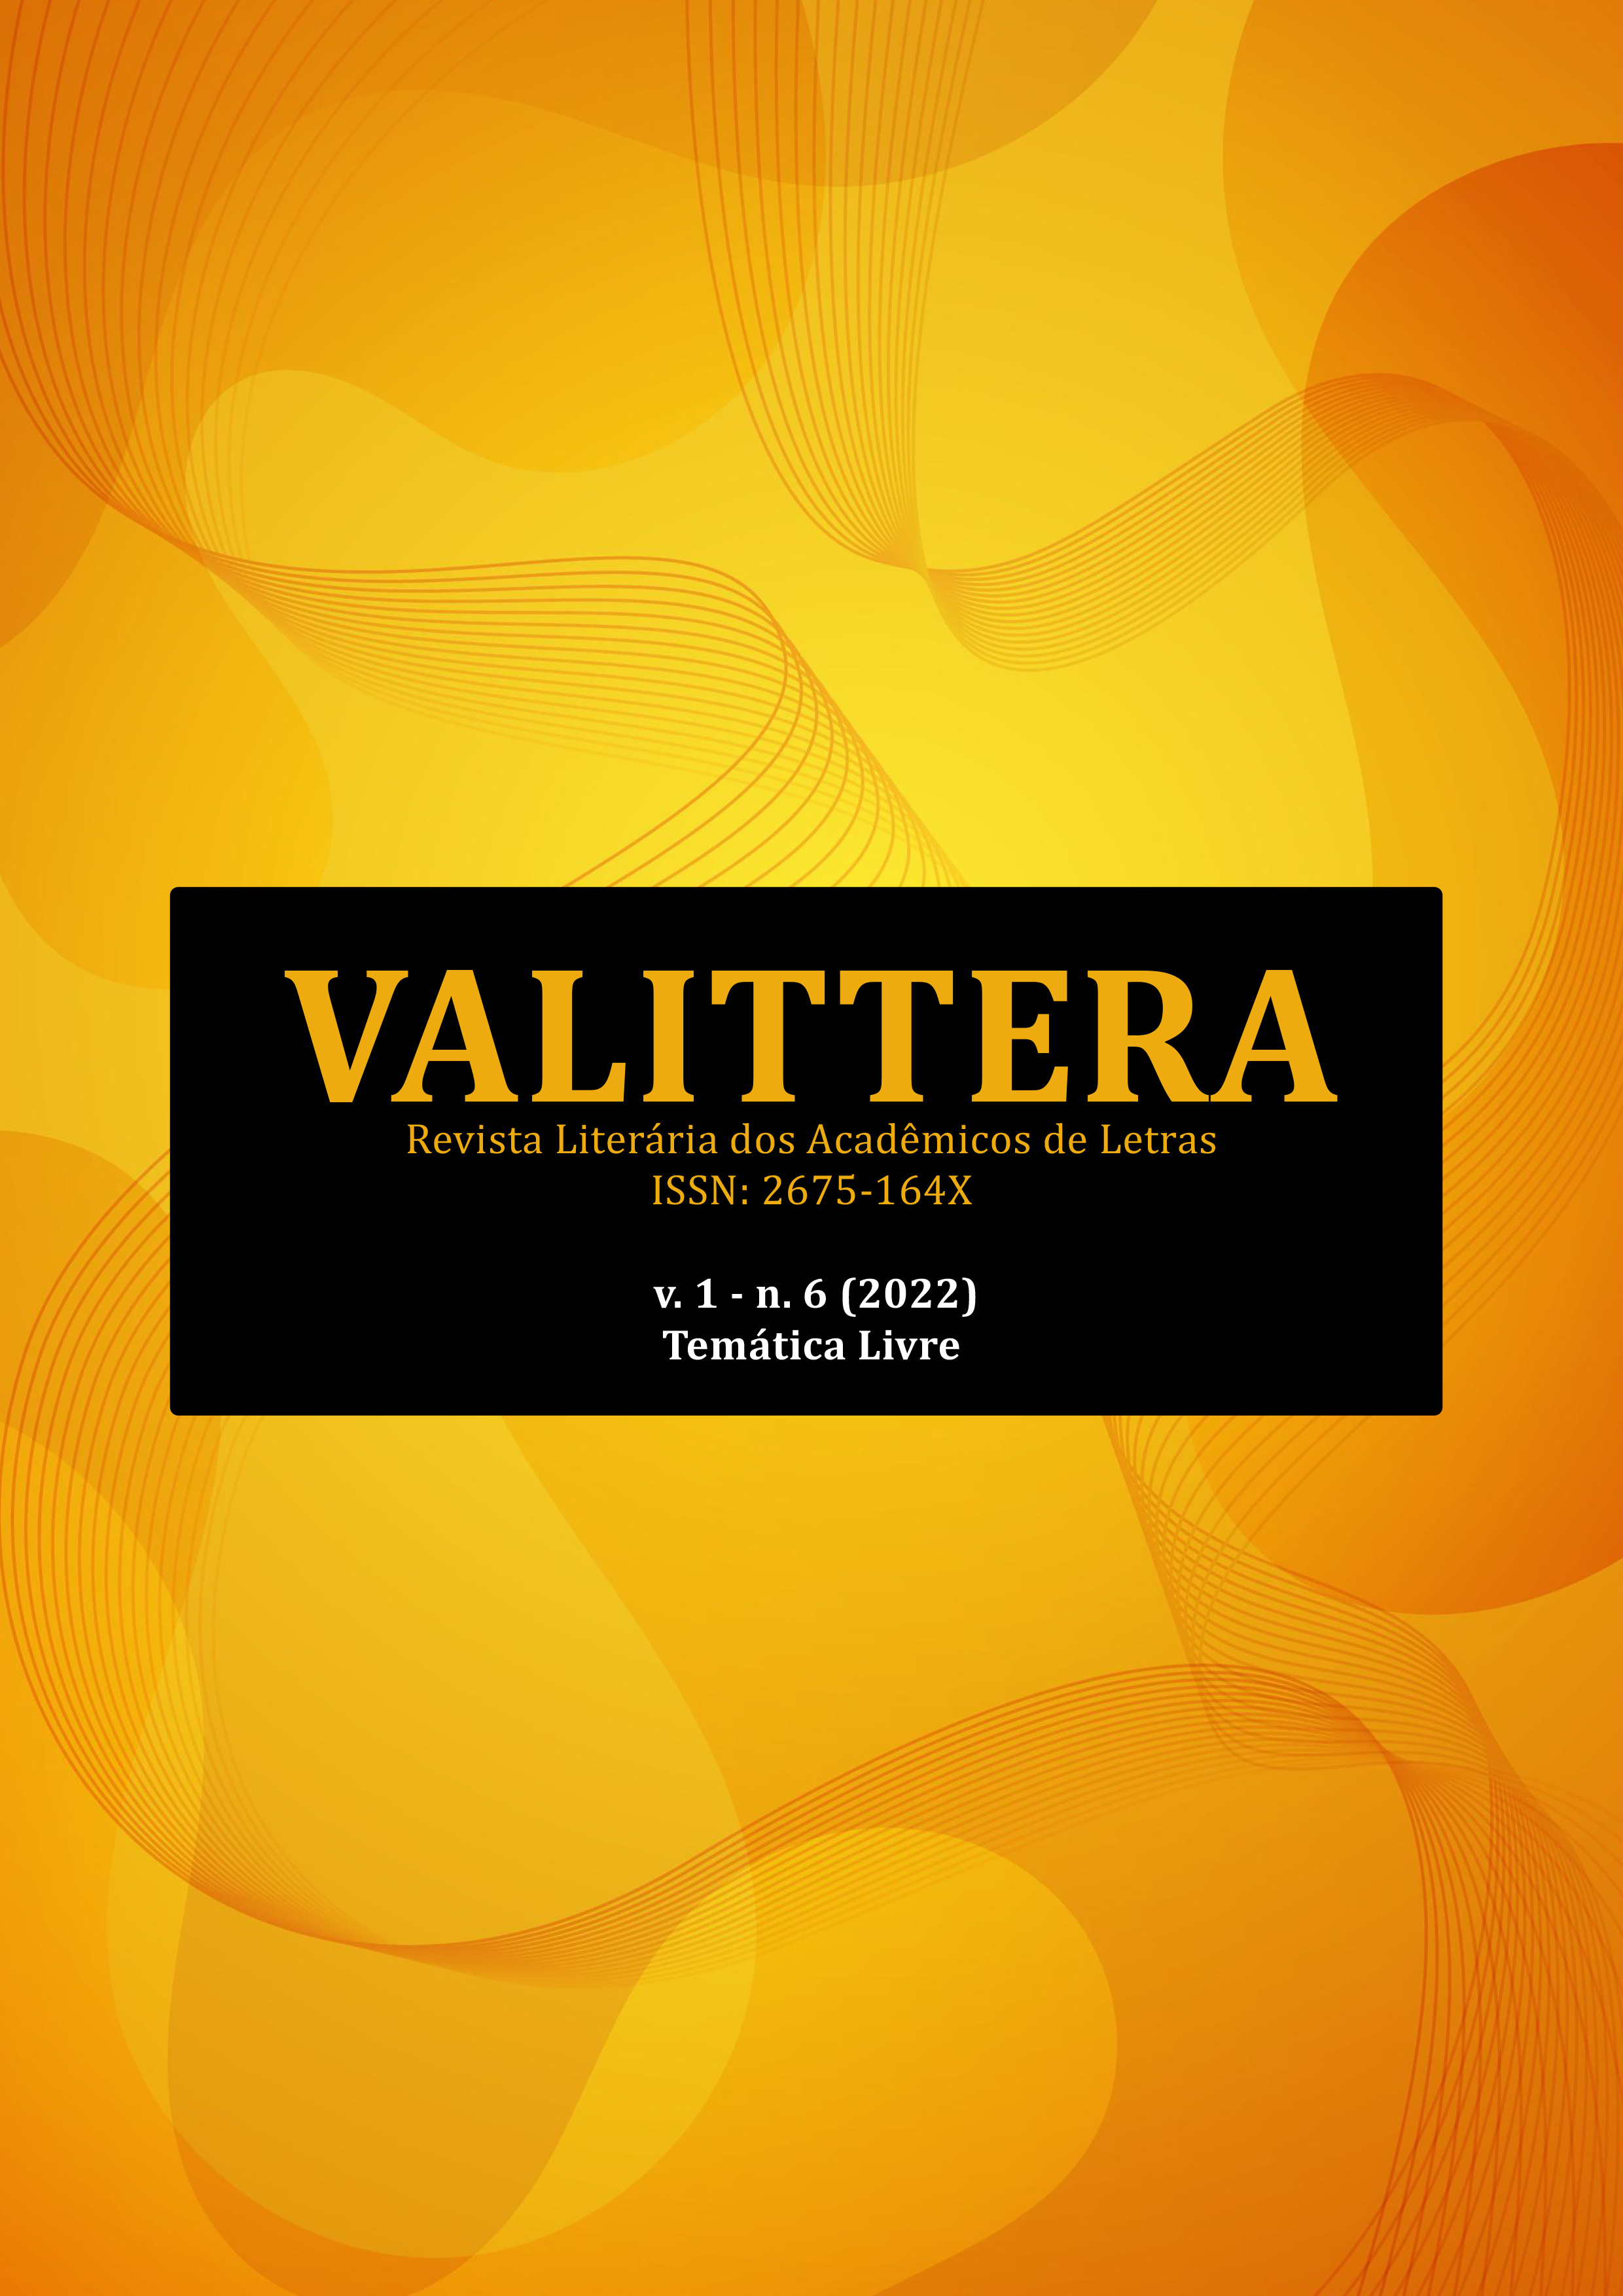 					Visualizar v. 1 n. 6 (2022): VALITTERA - TEXTOS LIVRES
				